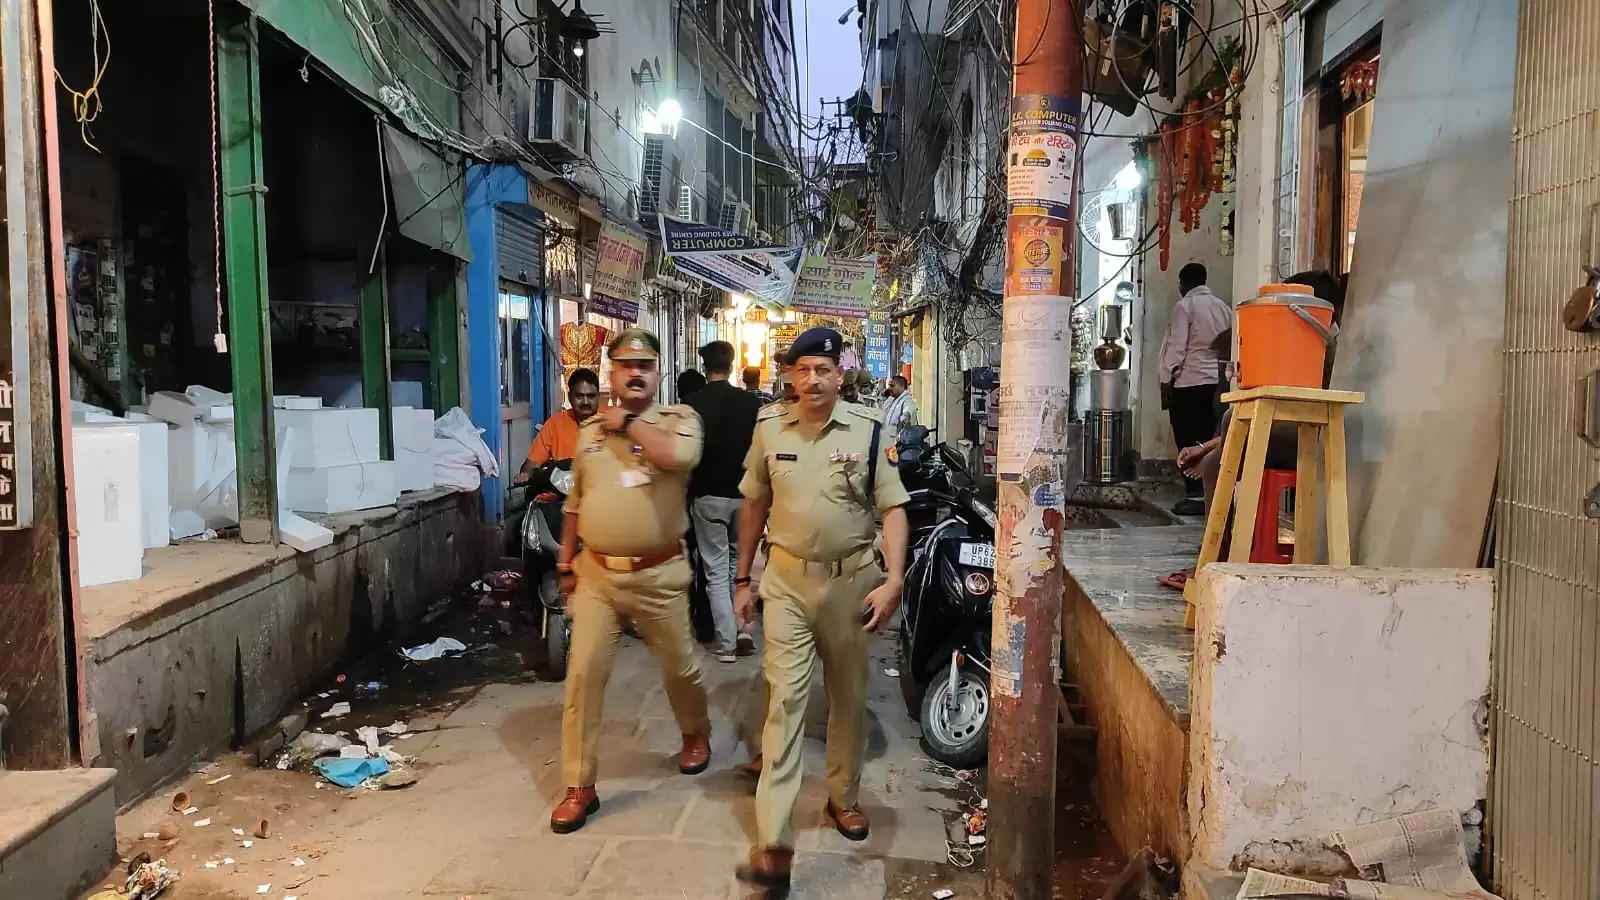 Varanasi News: Police patrolling on foot under the leadership of ACP Dashashwamedh